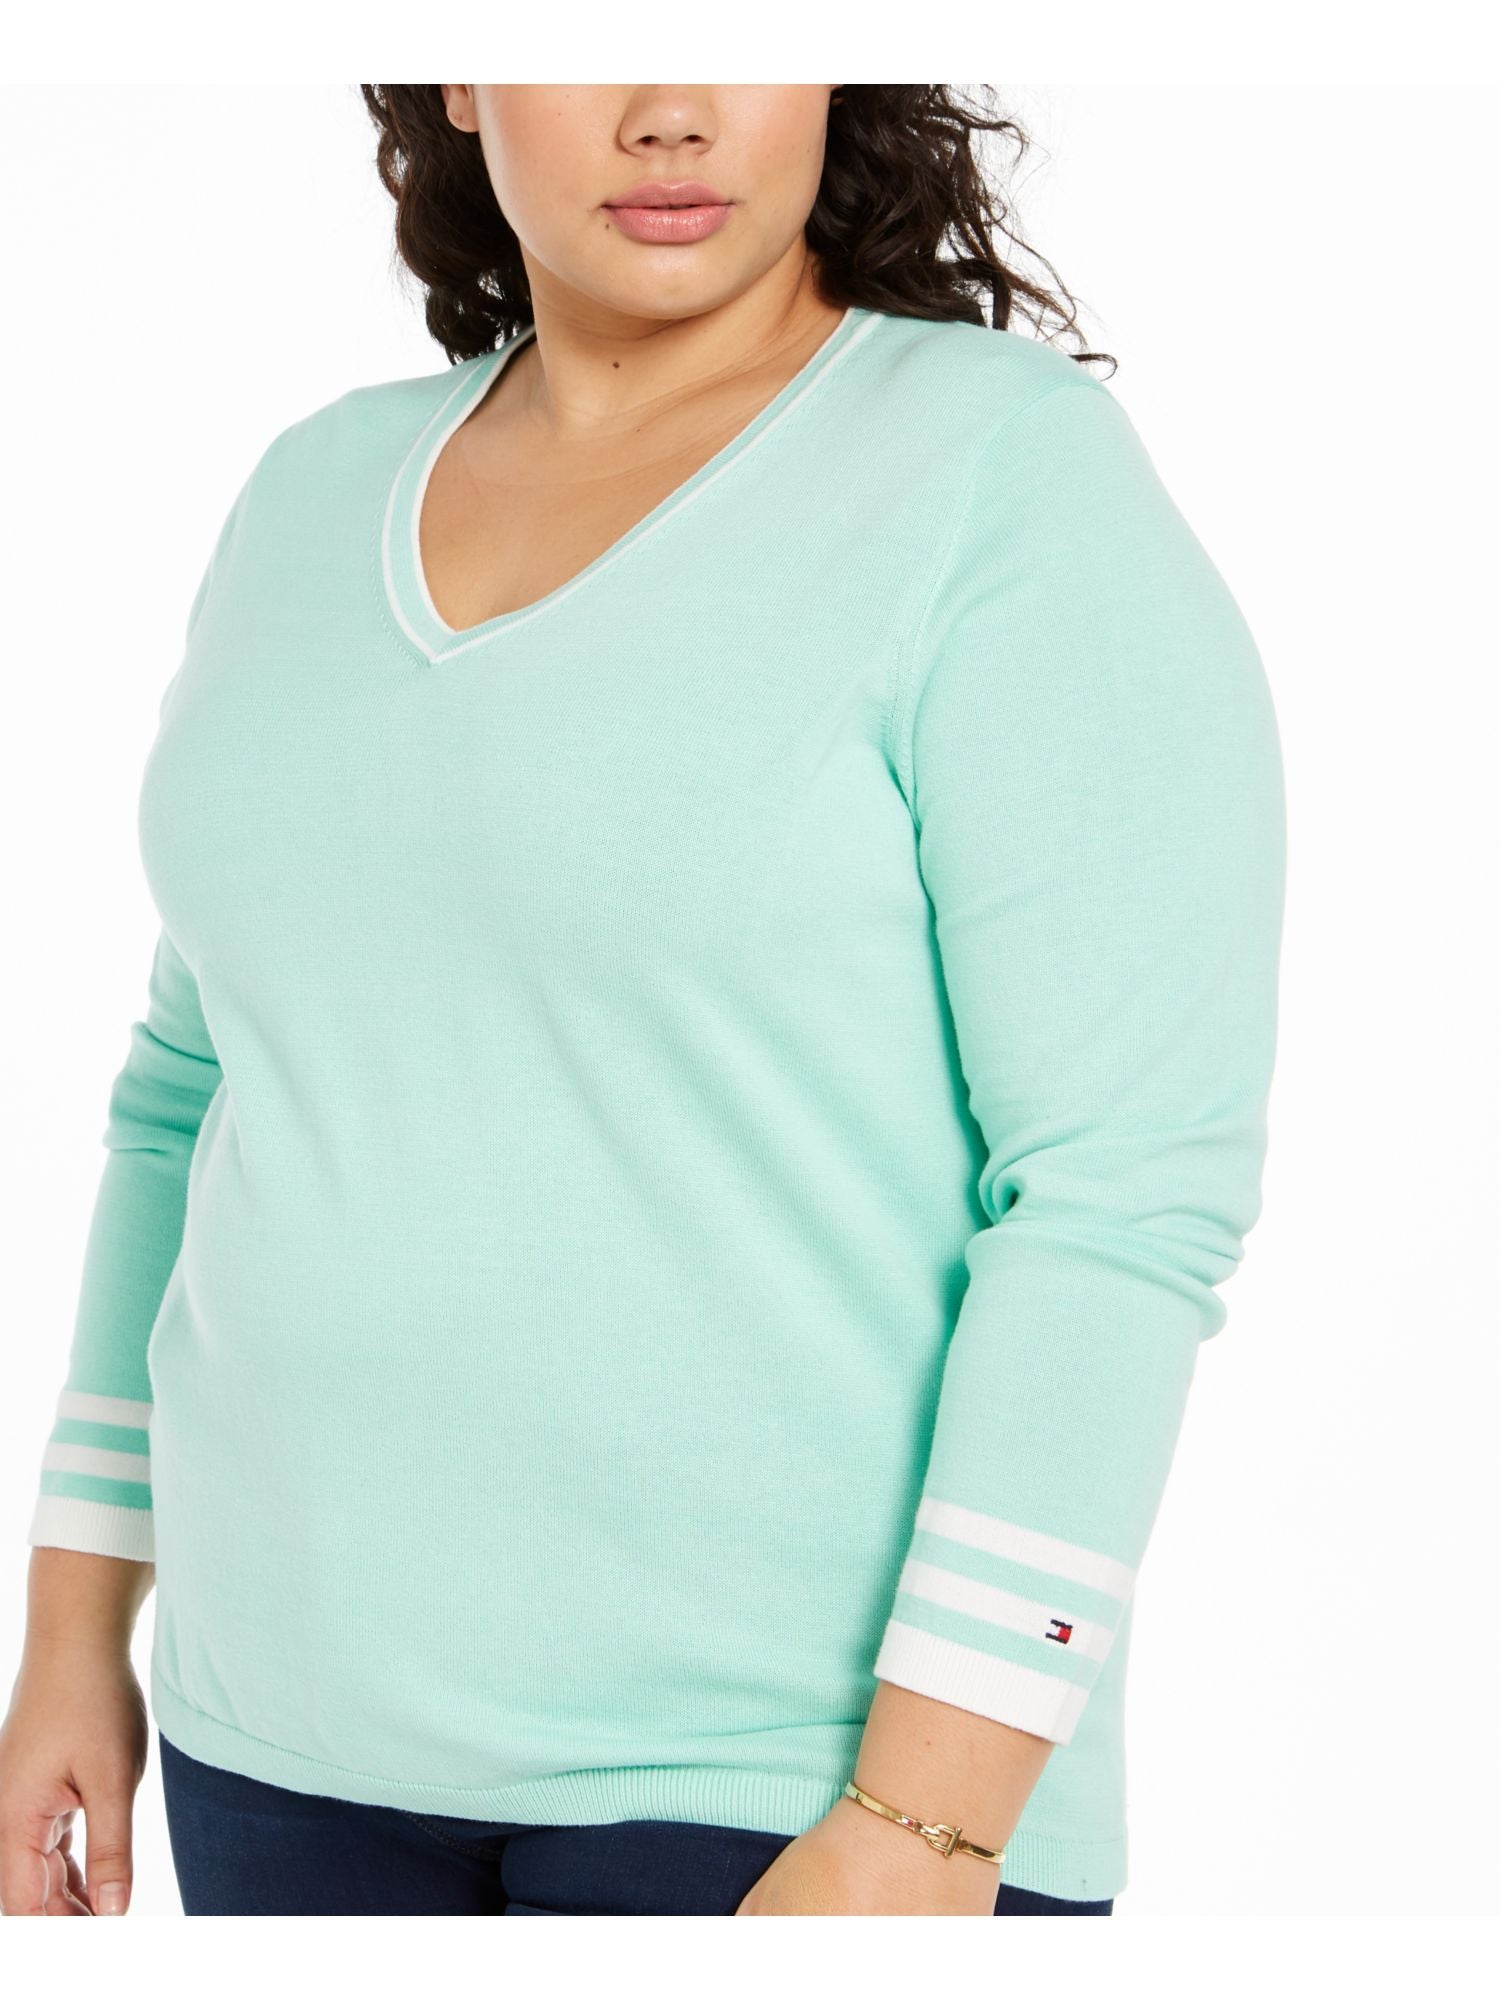 Tommy Hilfiger Women's Plus Cotton Striped V Neck Sweater Mint Size 0X